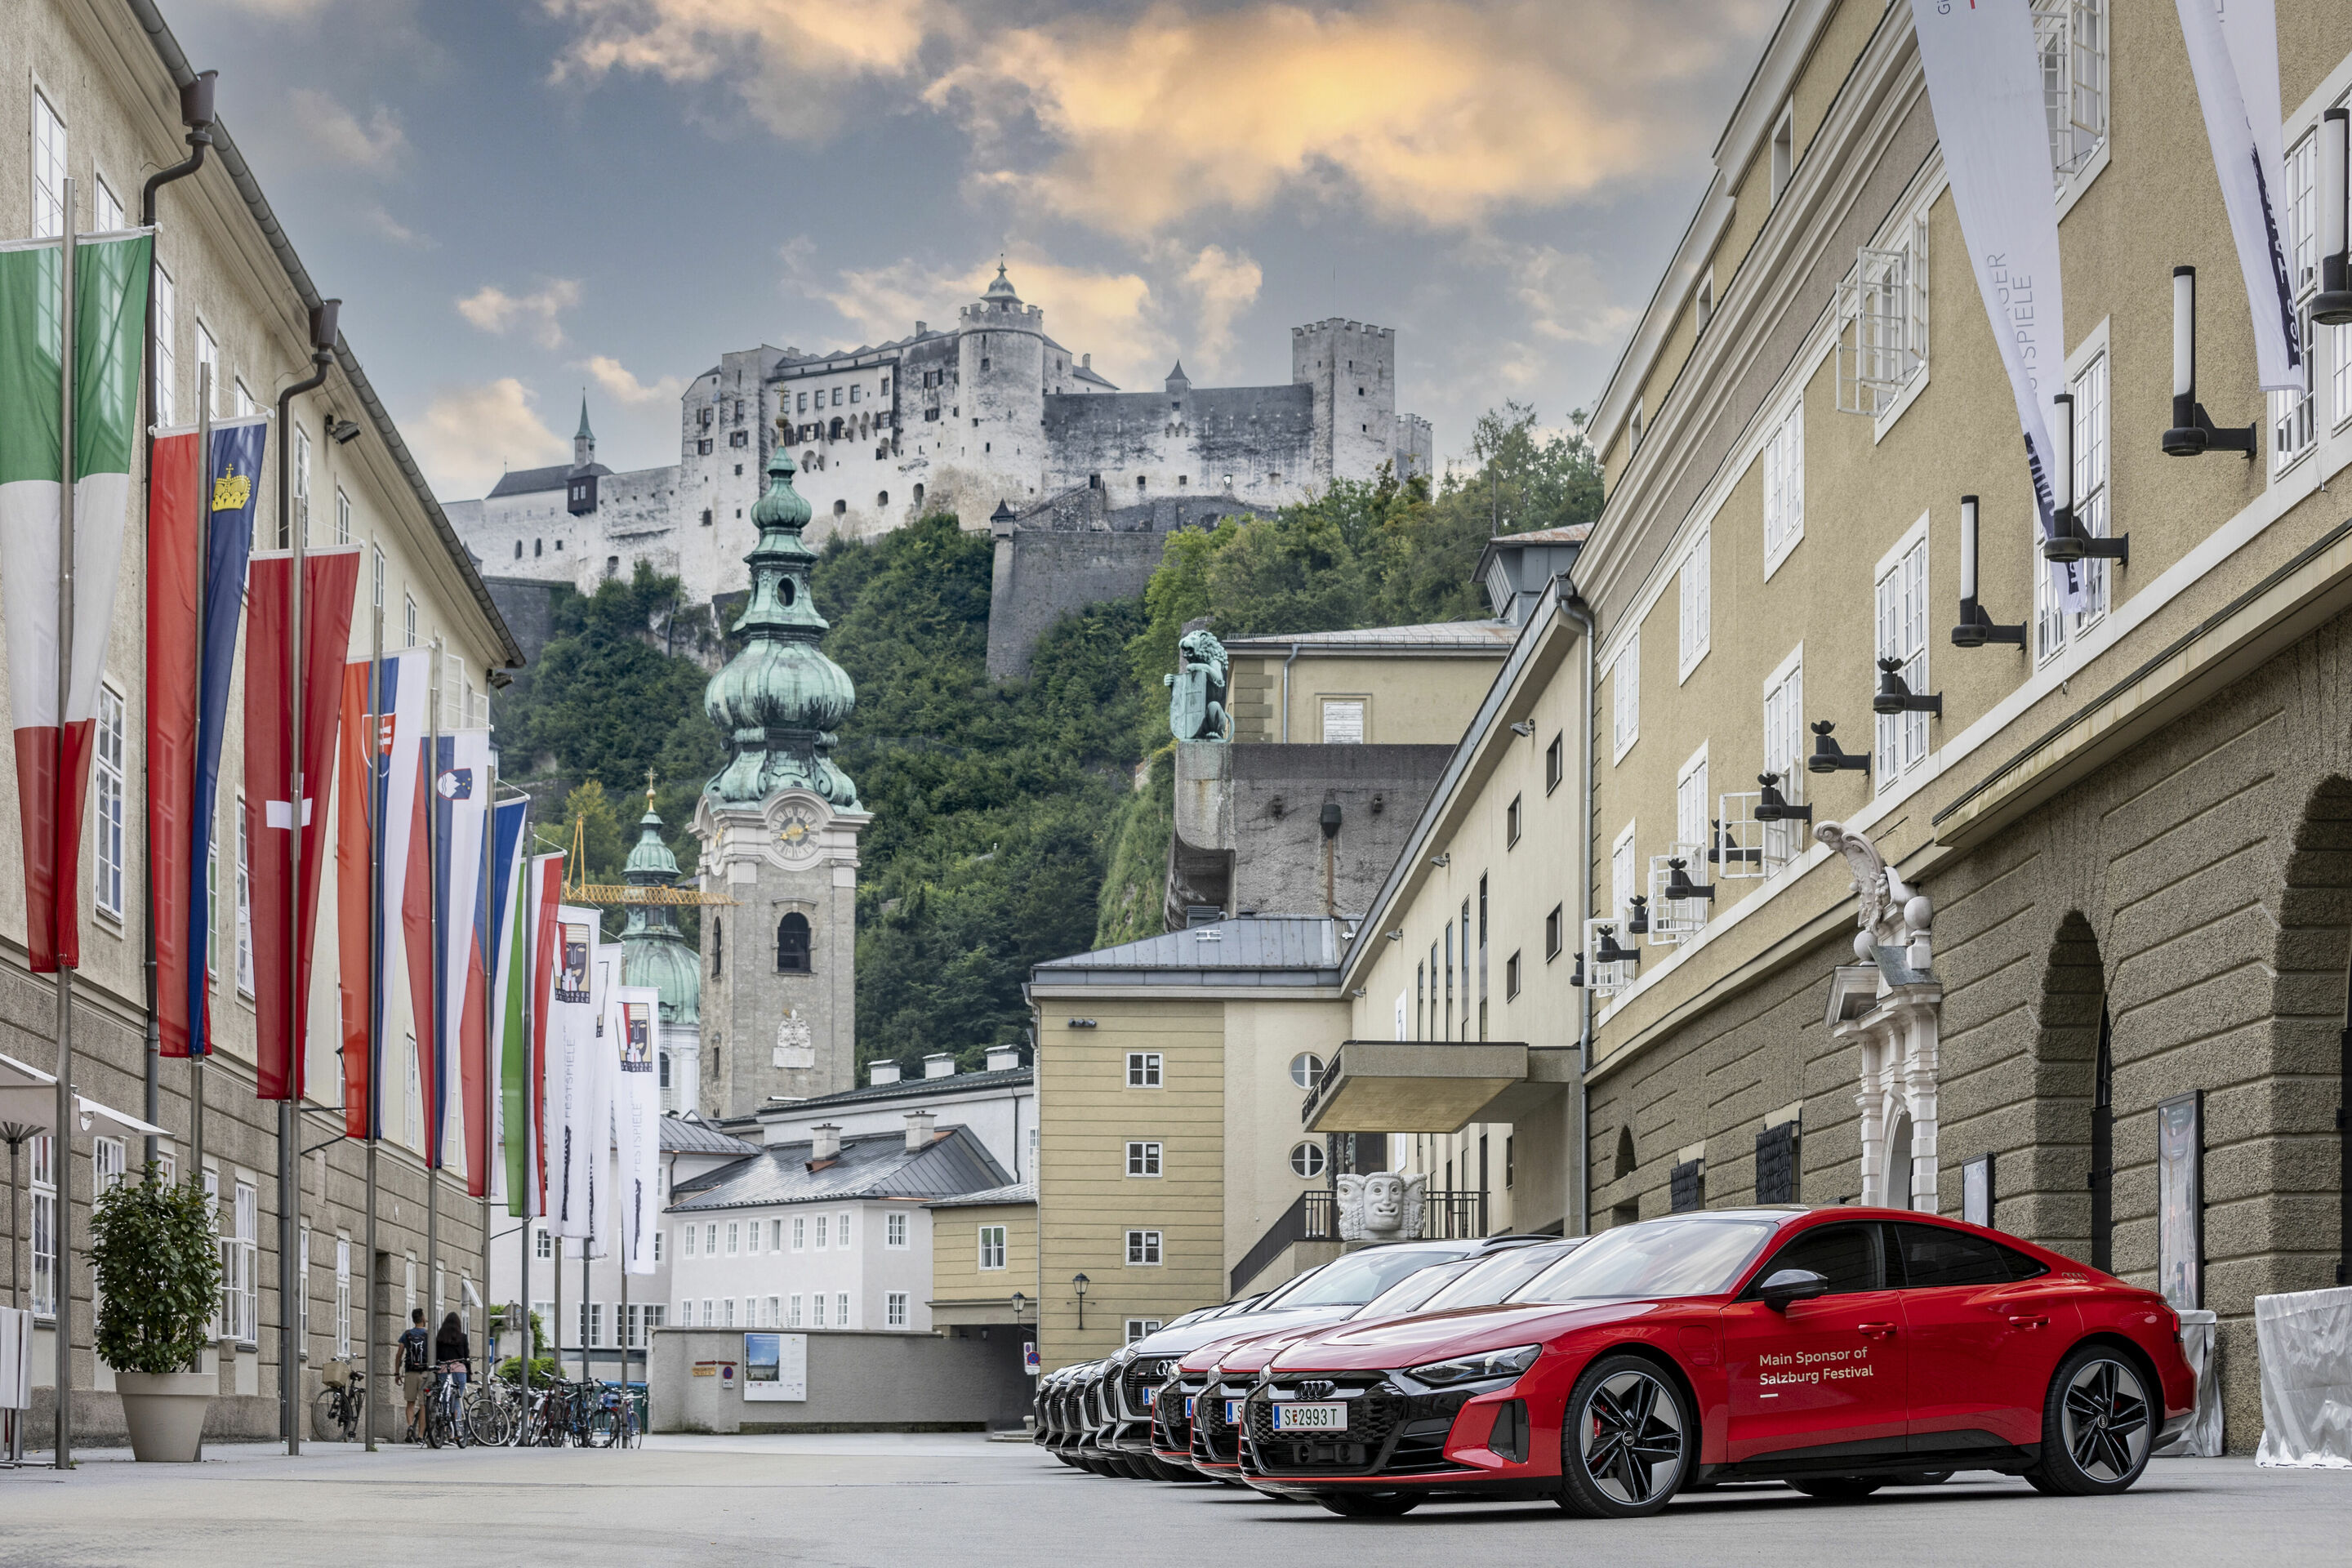 Audi remains main sponsor of Salzburg Festival